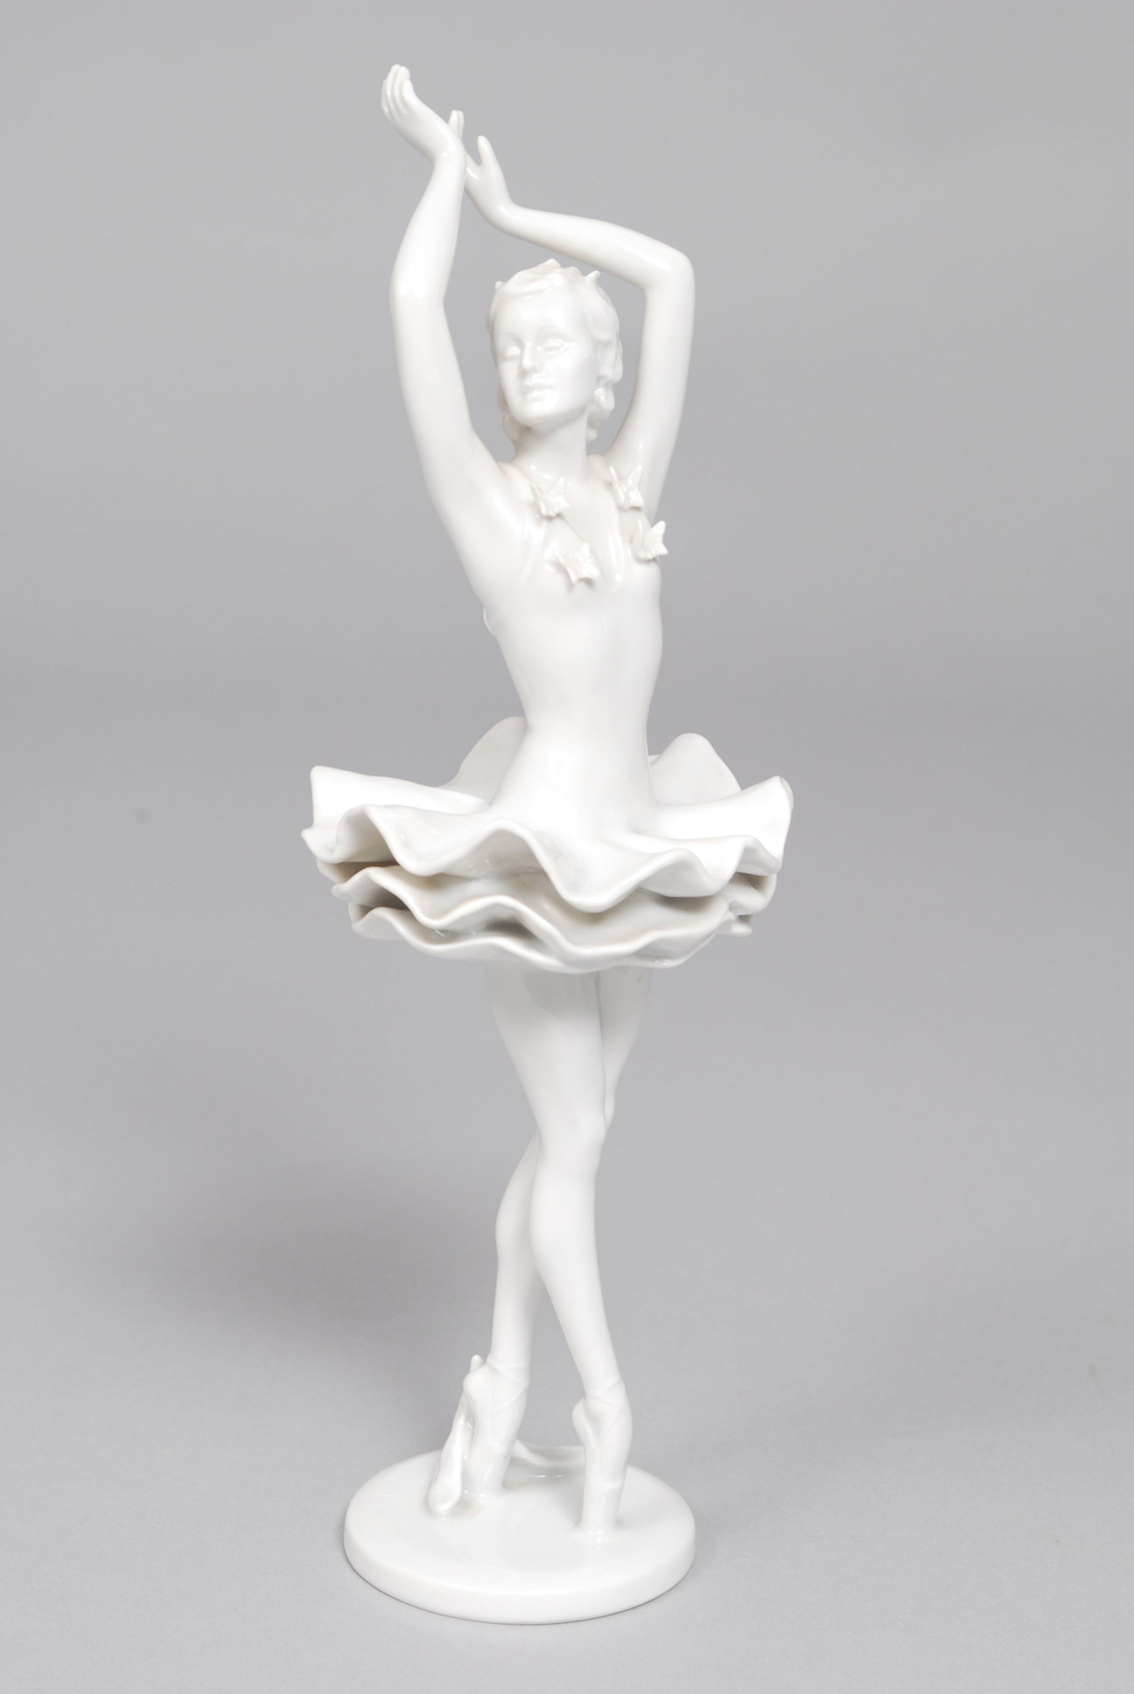 A figur eof the dancer Lilian Harvey in white porcelain